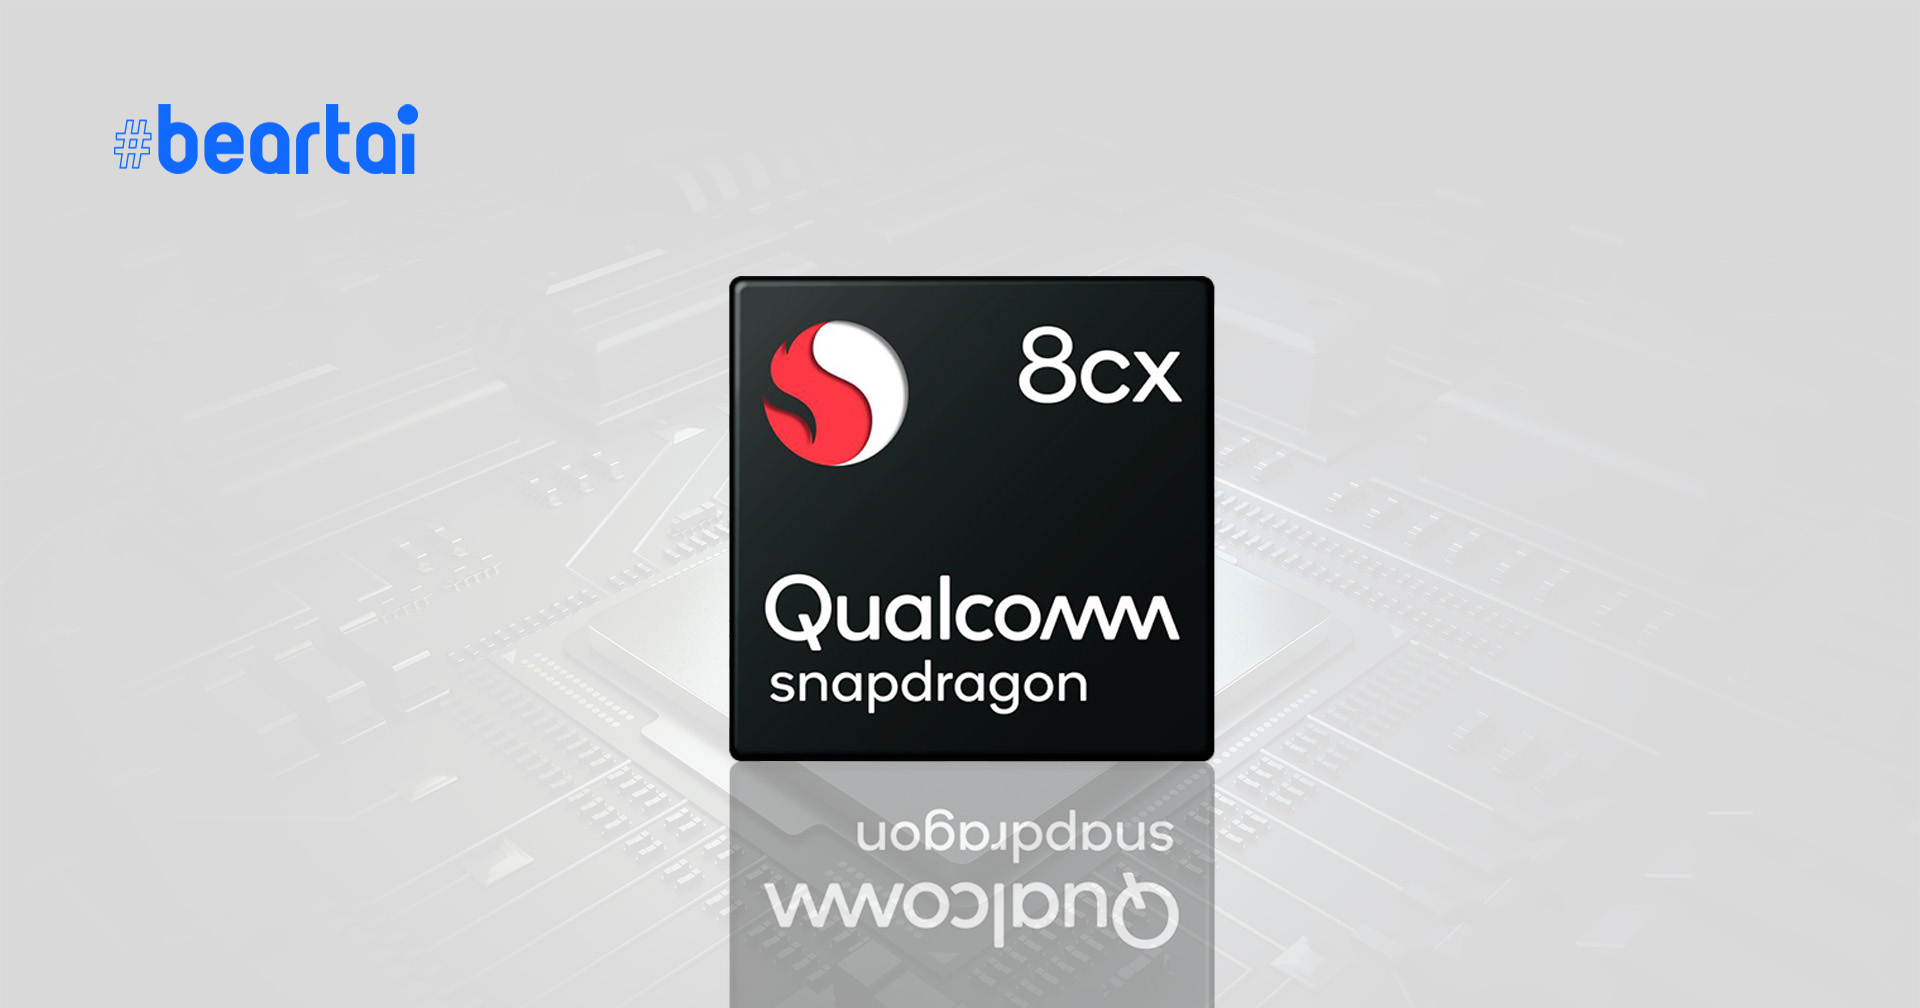 Qualcomm โต้กลับ อาจบุกตลาดโน้ตบุ๊กแบบ ARM อีกครั้ง ด้วย Snapdragon 8cx ที่เร็วถึง 3.15GHz!